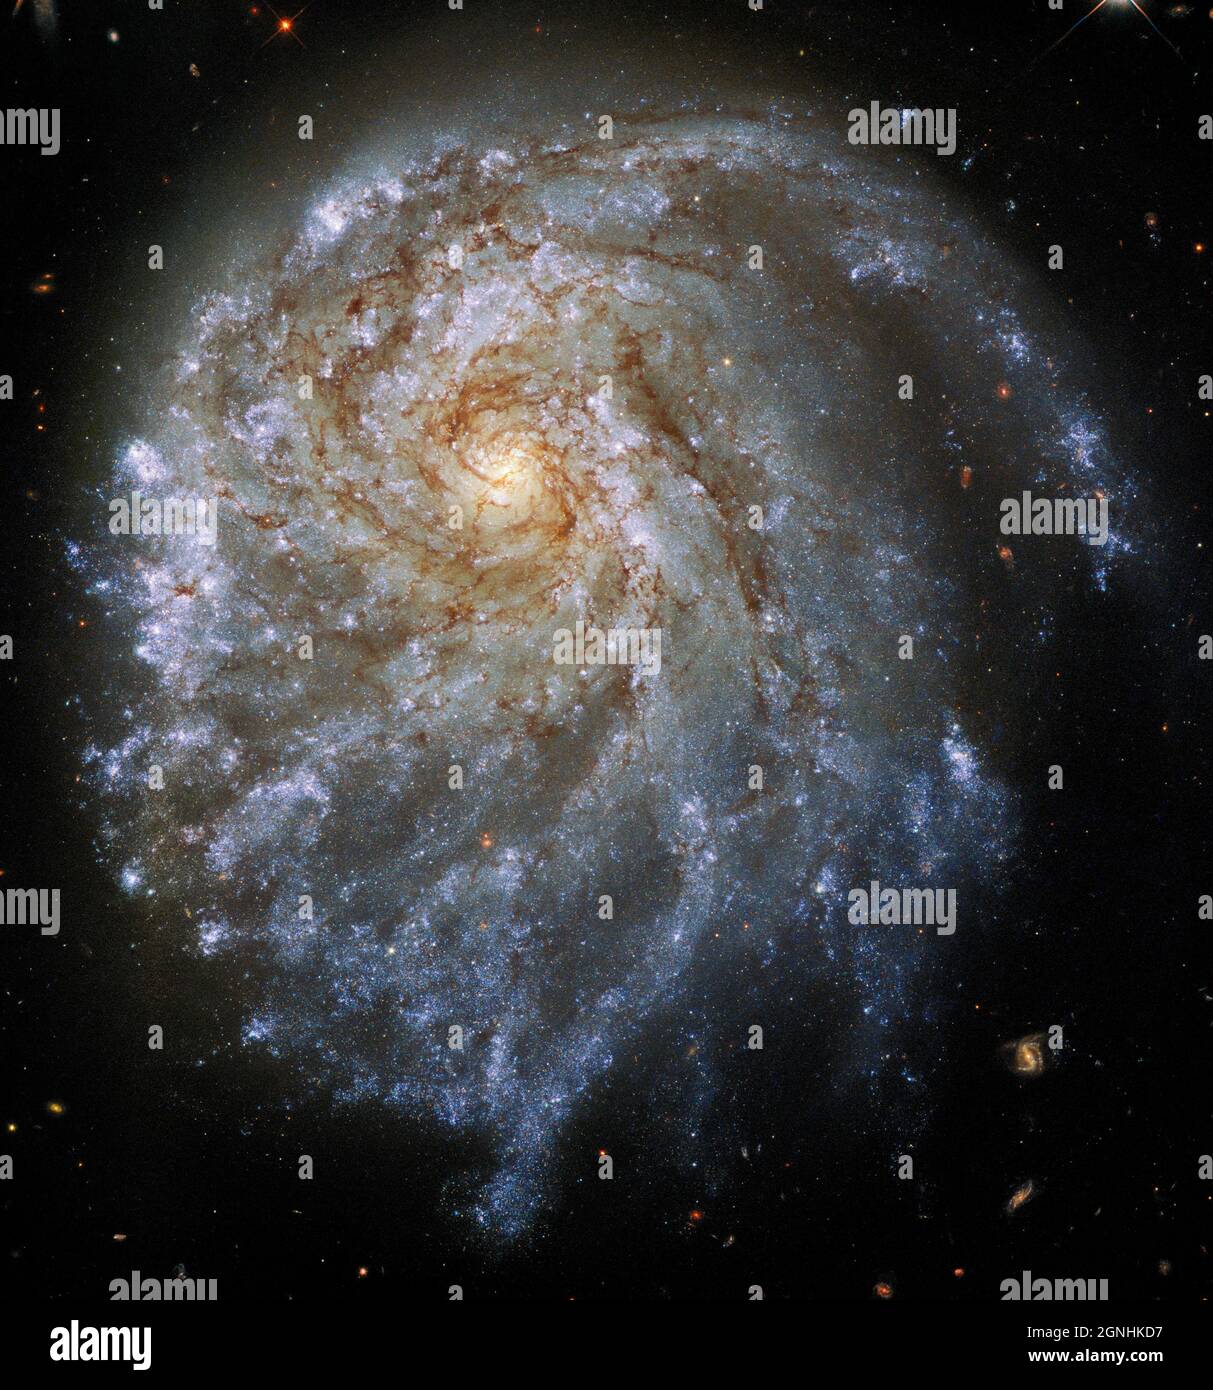 Questa immagine mostra i bracci di uscita di NGC 2276, una galassia a spirale a 120 milioni di anni luce di distanza nella costellazione di Cefeo. . Fonte immagine NASA/ESA Hubble Space Telescope Foto Stock